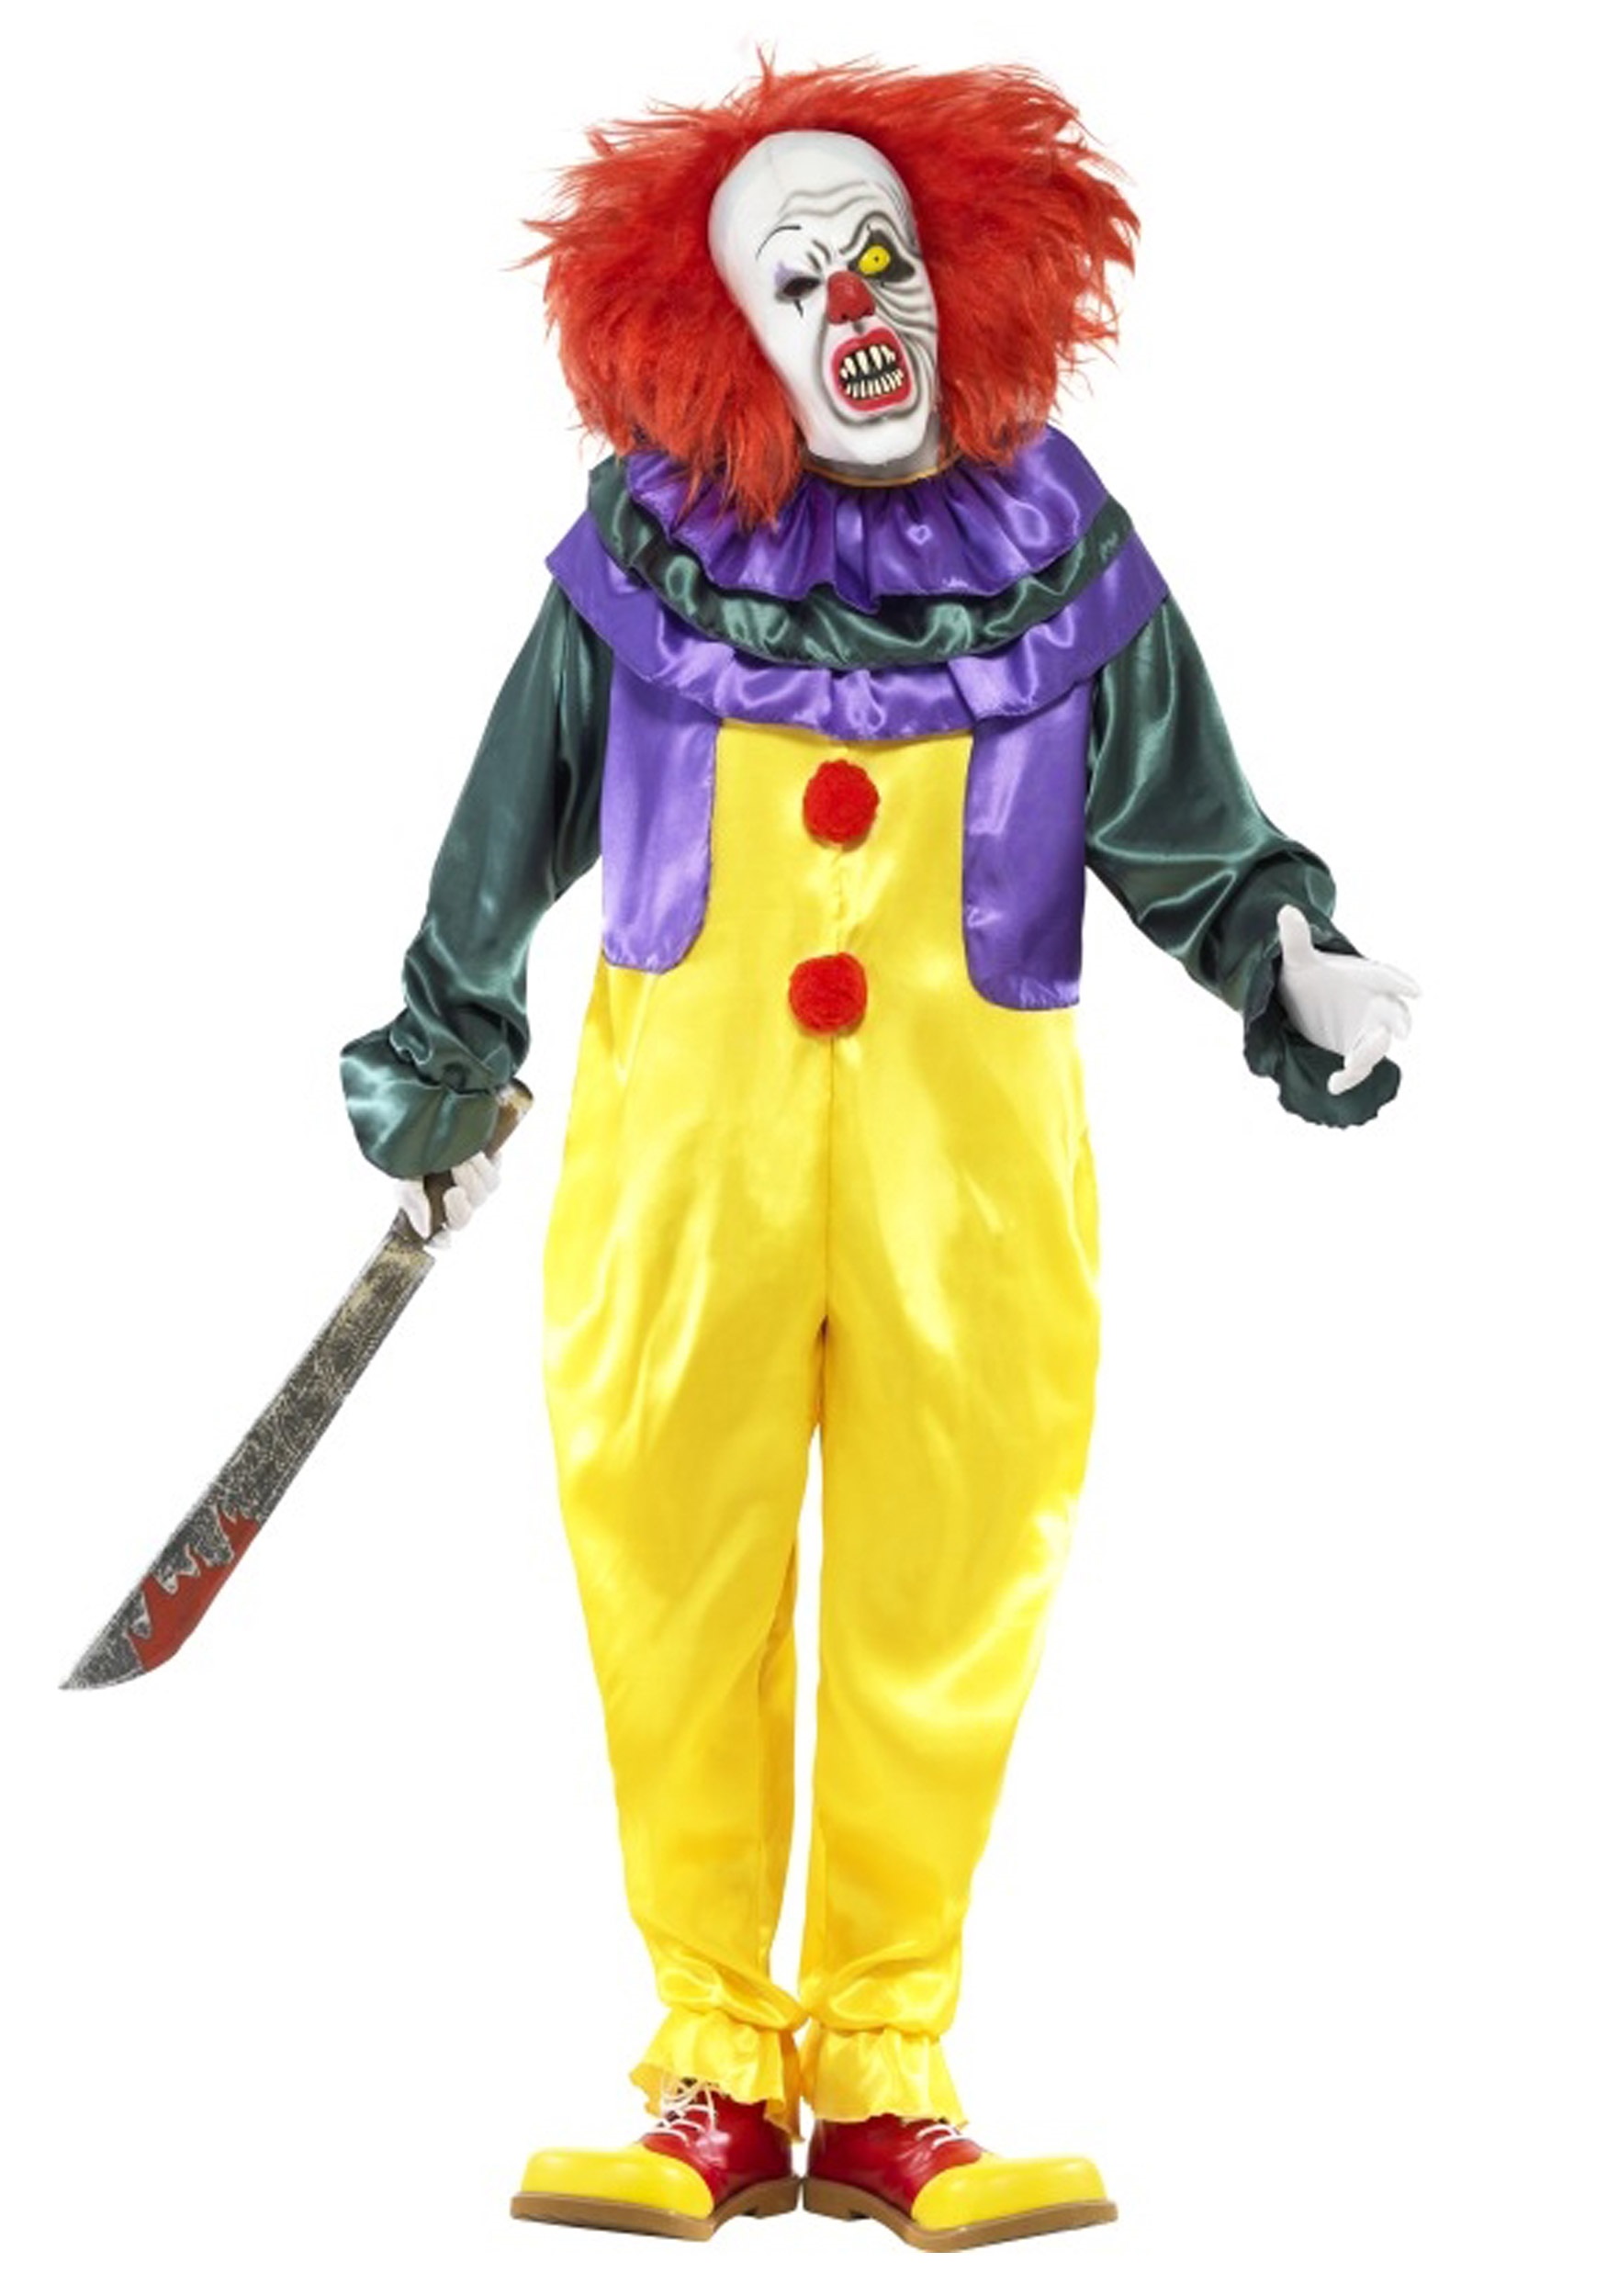 Horror Clown Costume